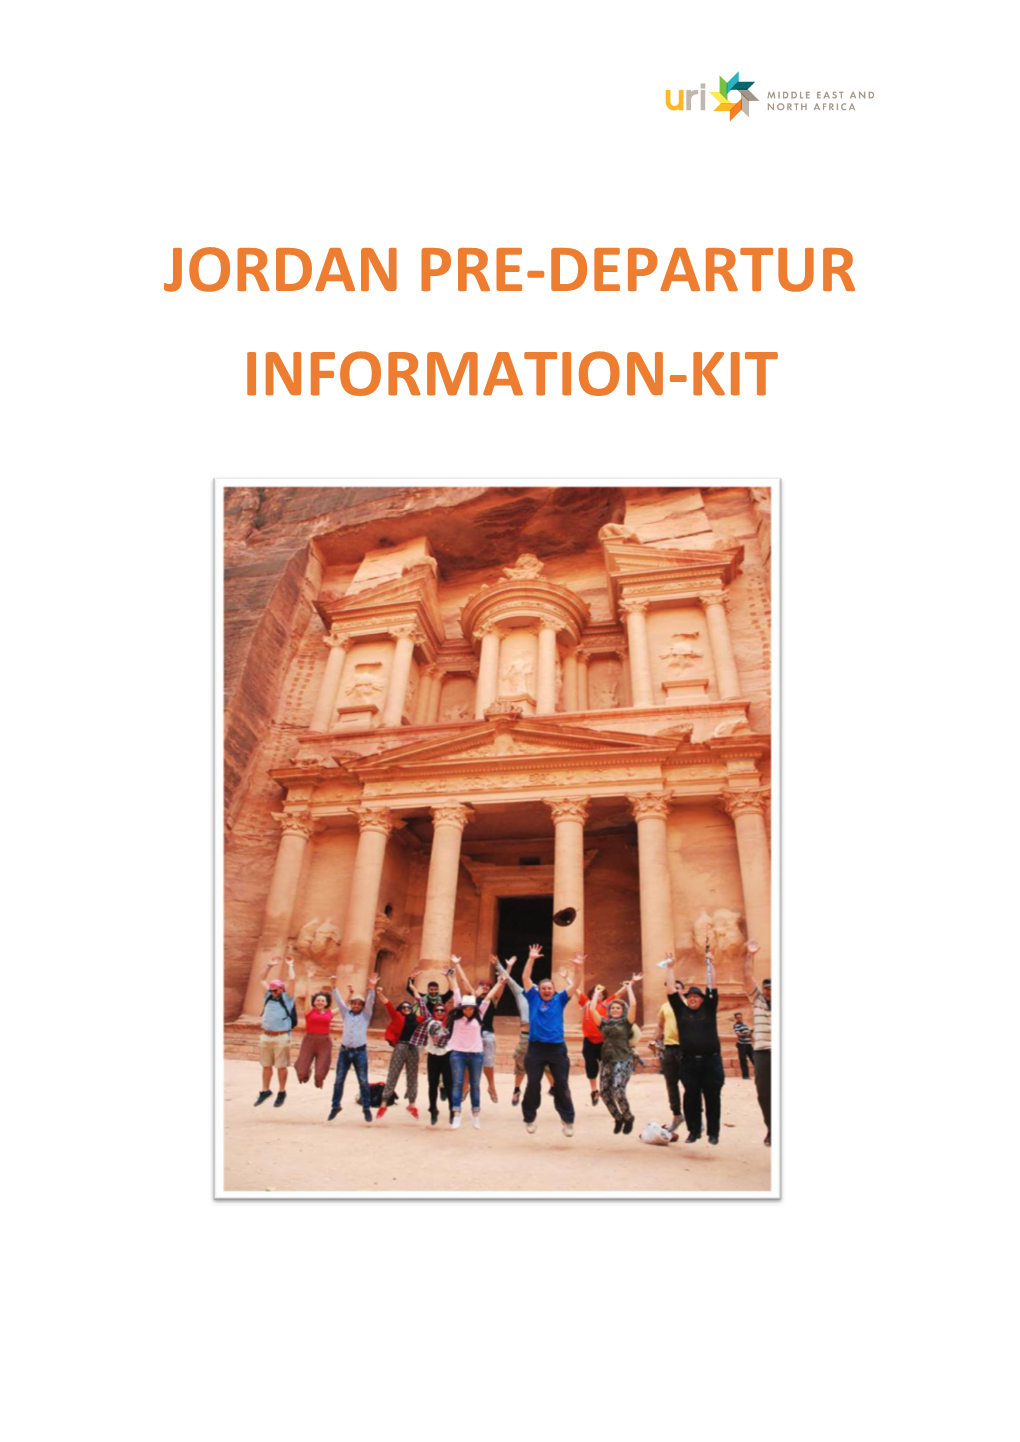 Jordan Pre-Departur Information-Kit